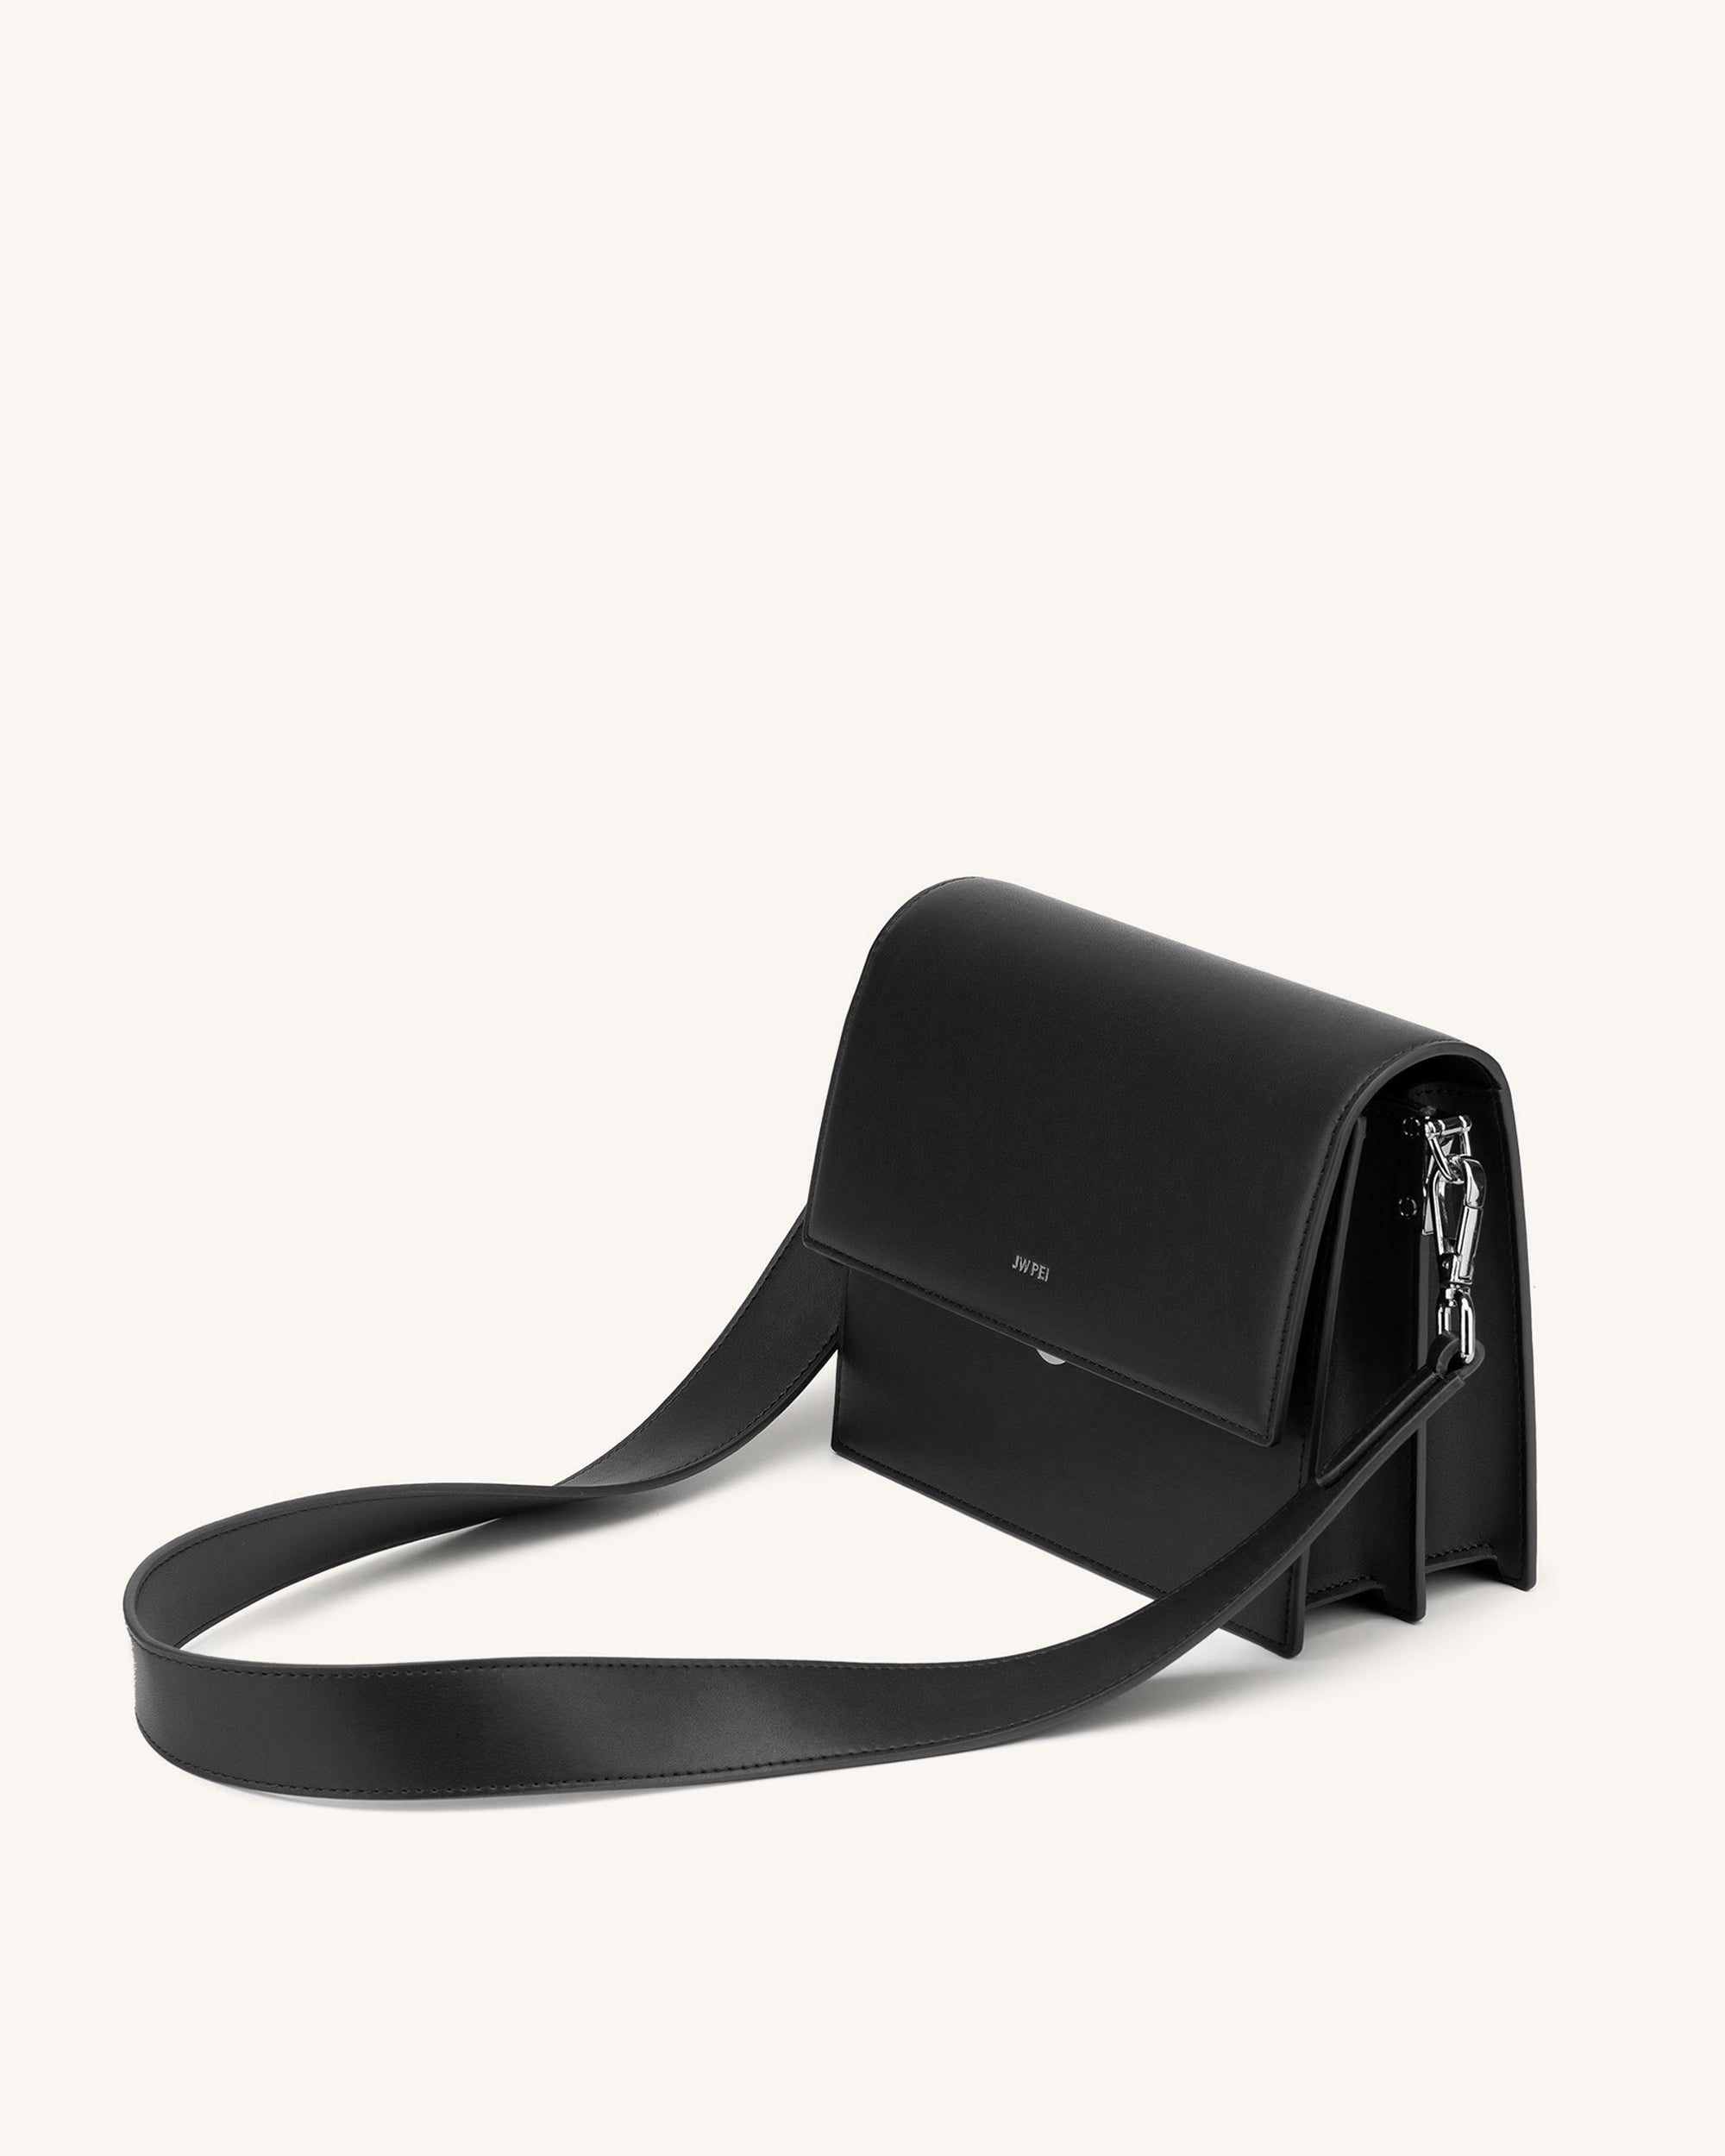 Should You Buy? JW Pei Mini Flap Crossbody Bag 